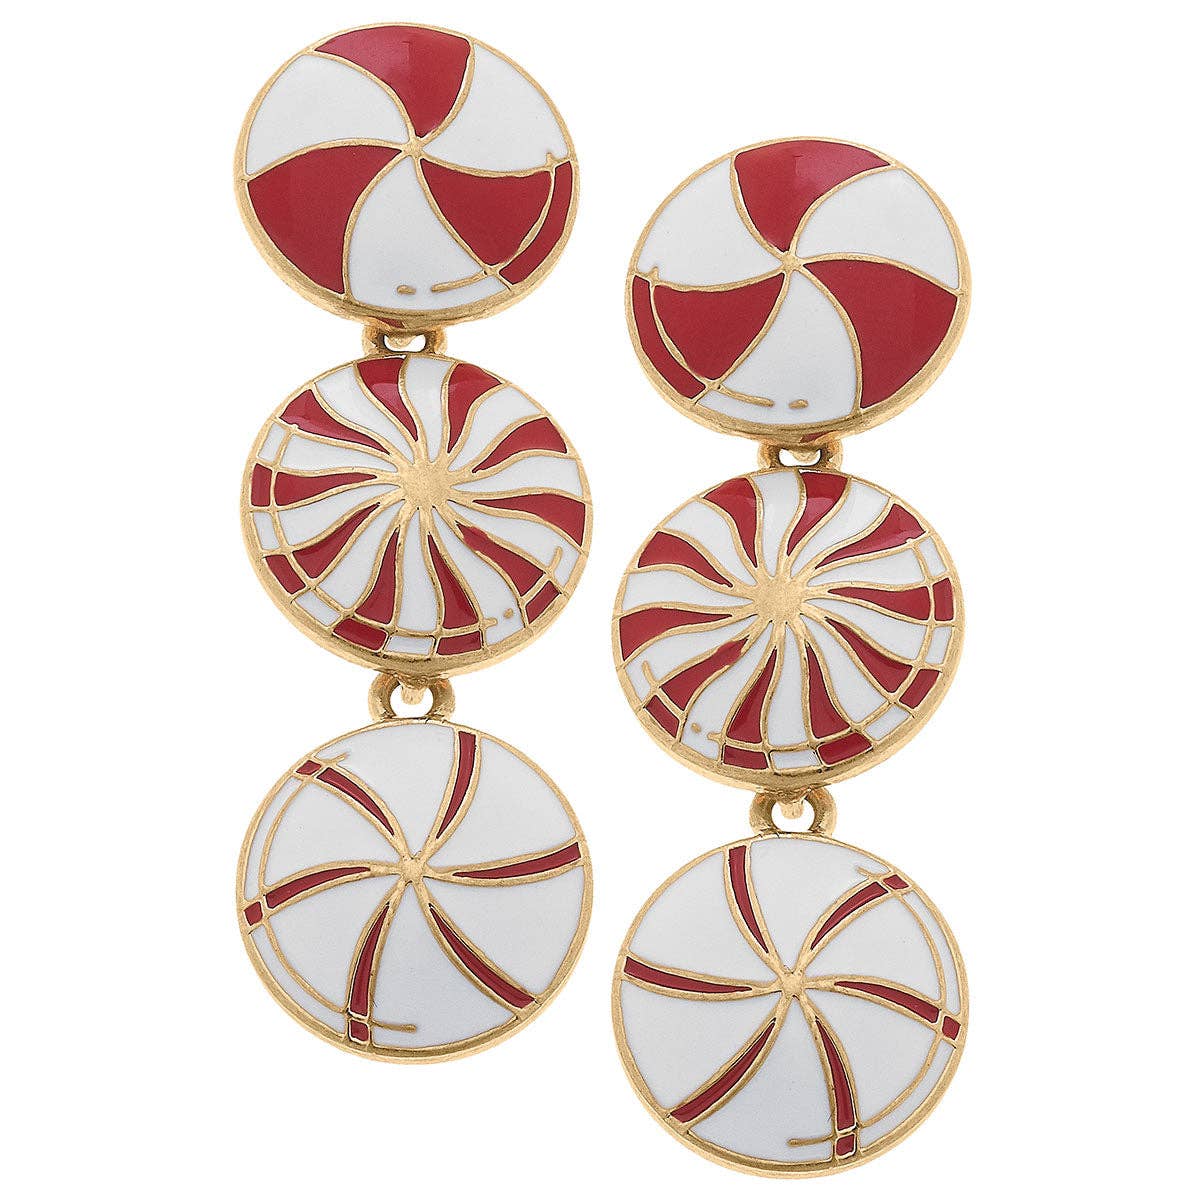 Peppermint Candies Linked Enamel Earrings in Red & White